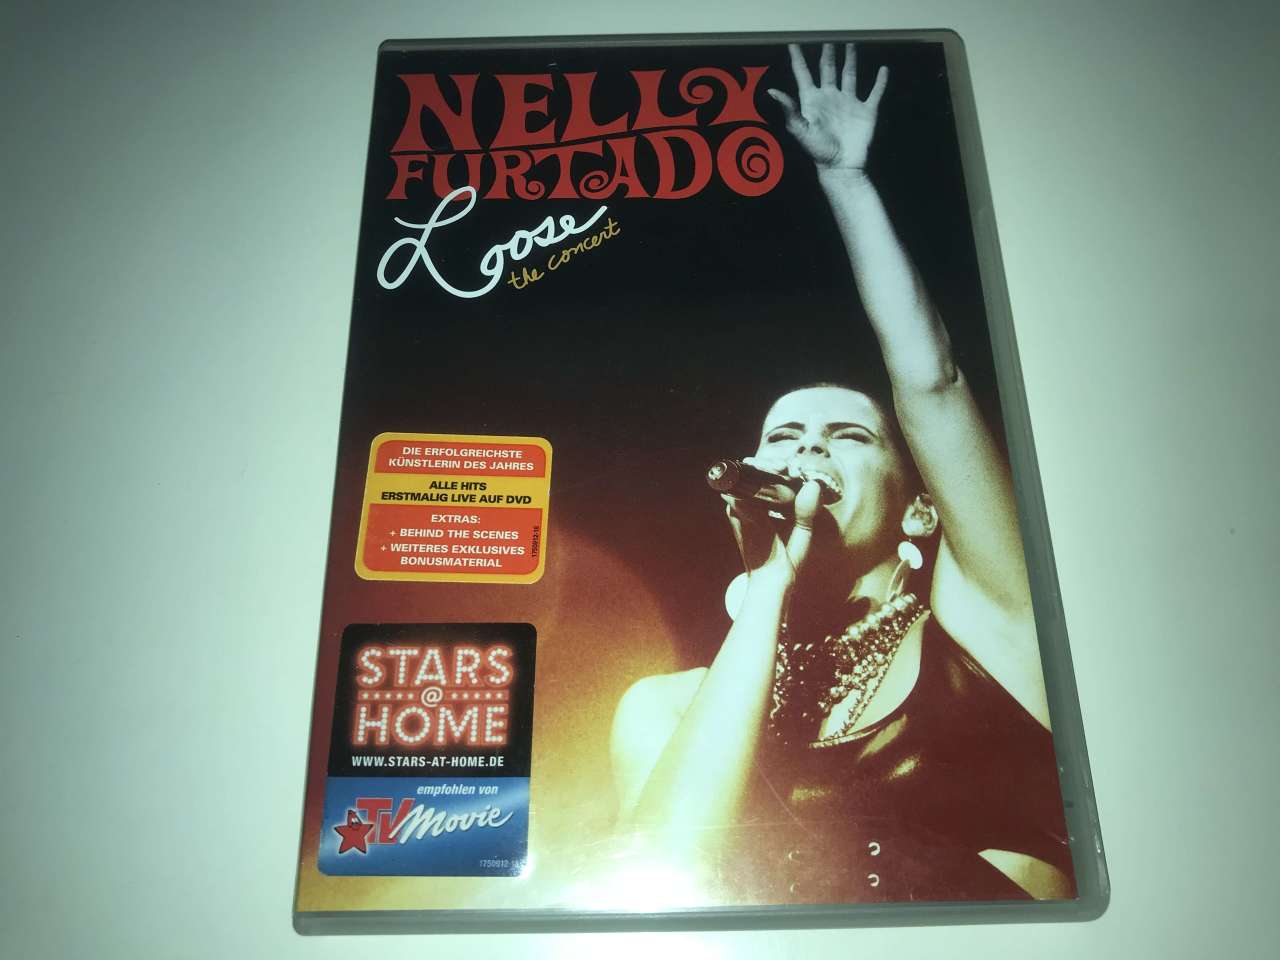 Nelly Furtado – Loose: The Concert